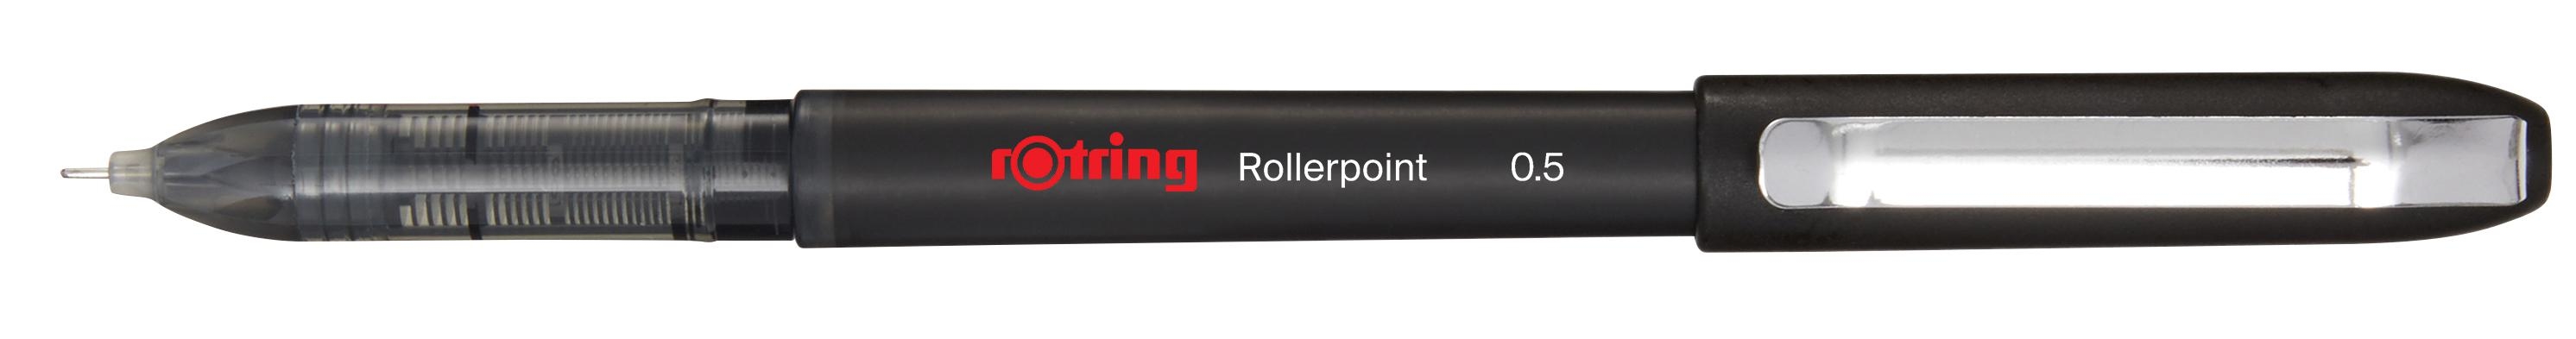 ROTRING Rollerpoint 0.5mm 2146103 noir noir